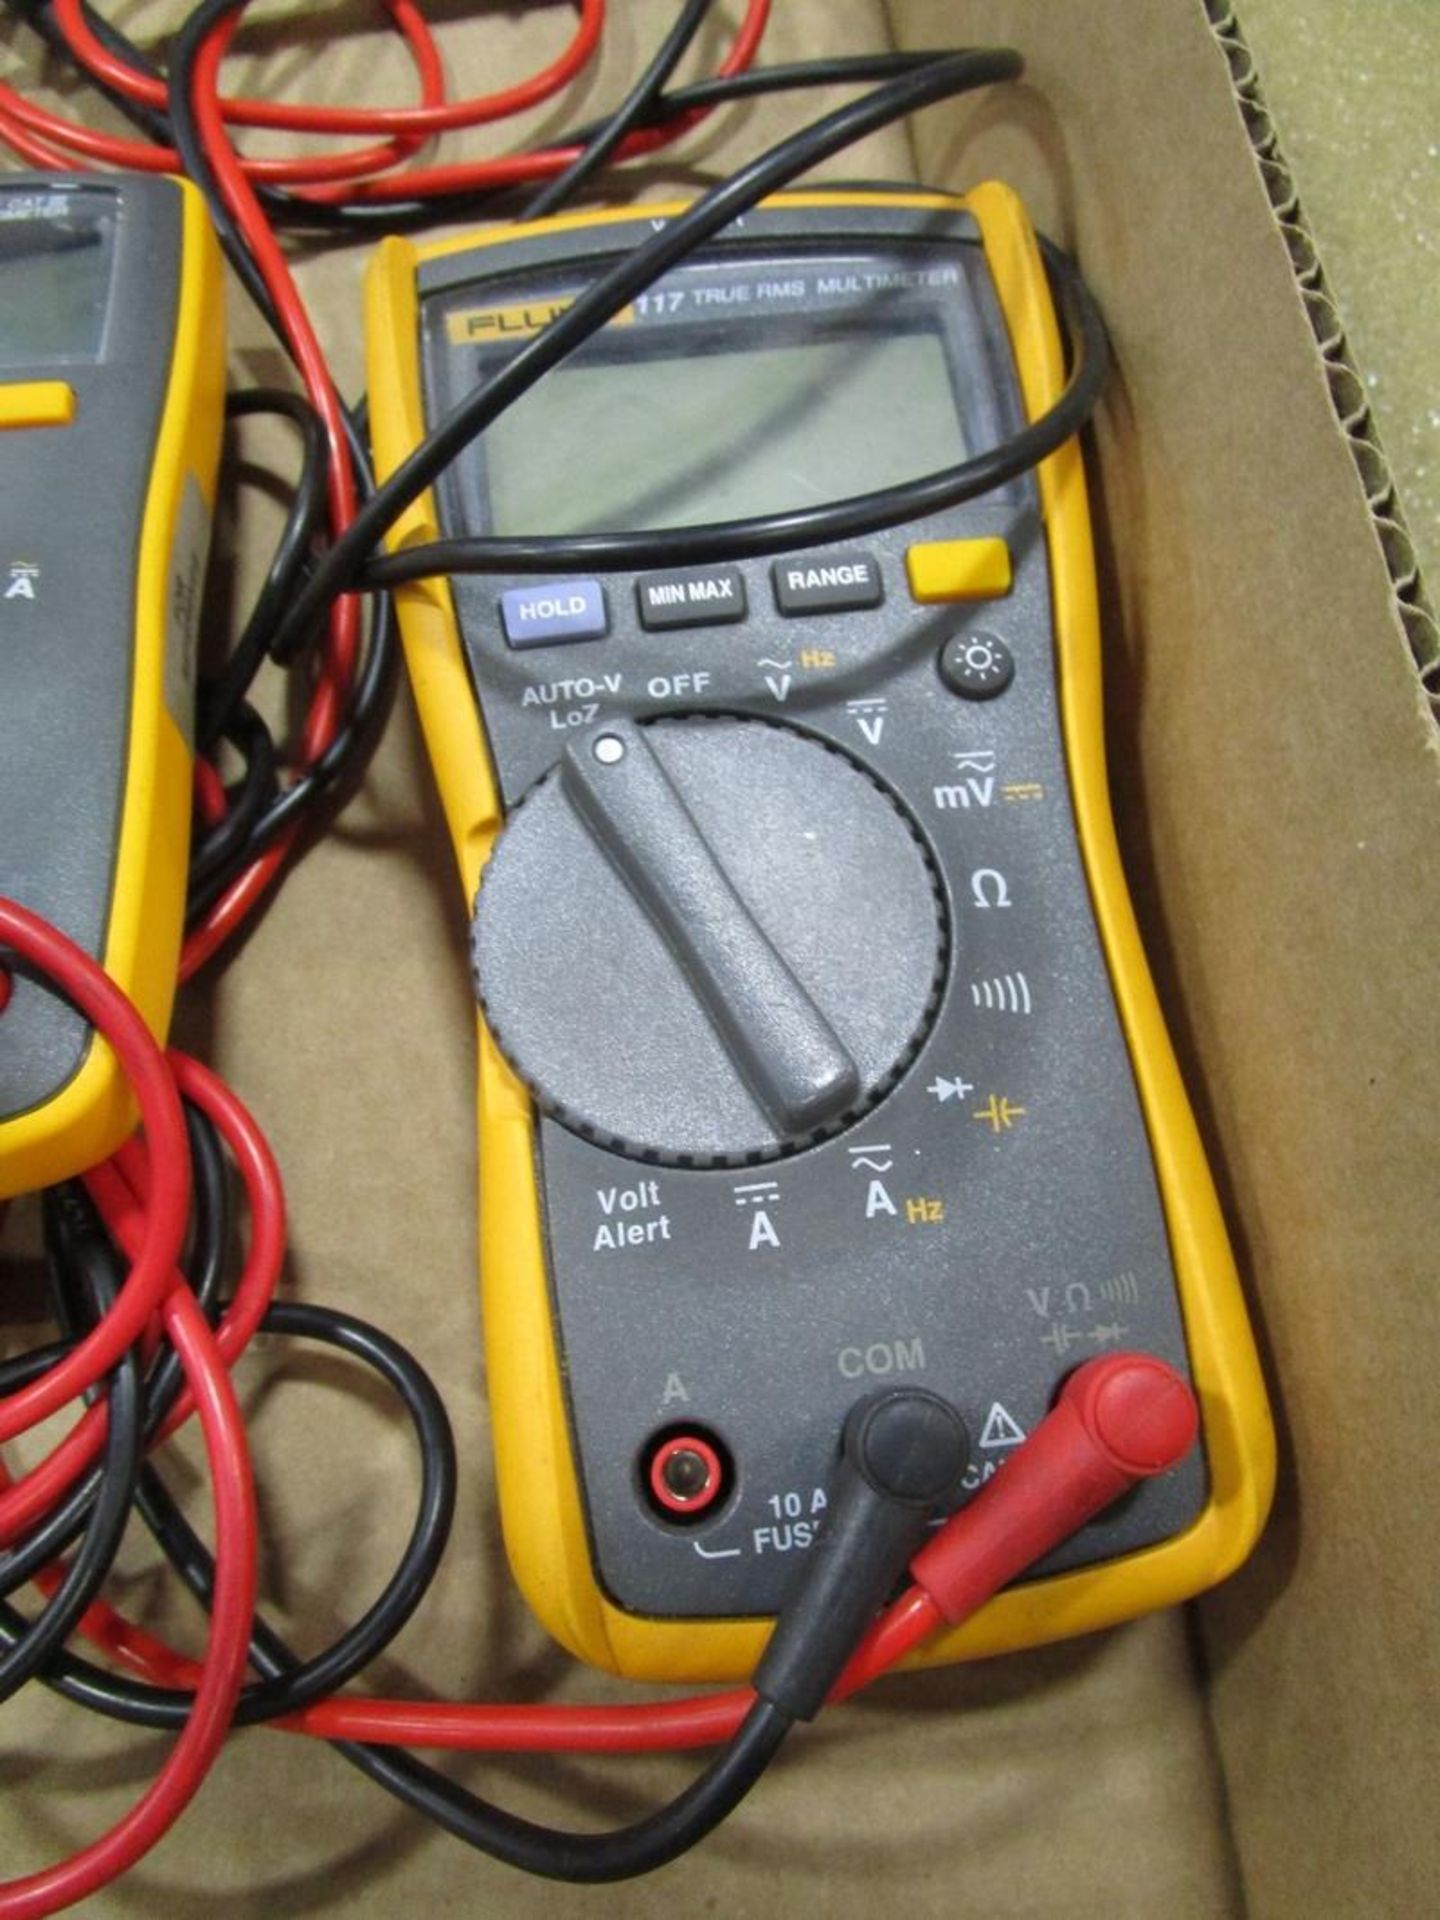 Fluke Electrical Test Equipment - Image 2 of 3